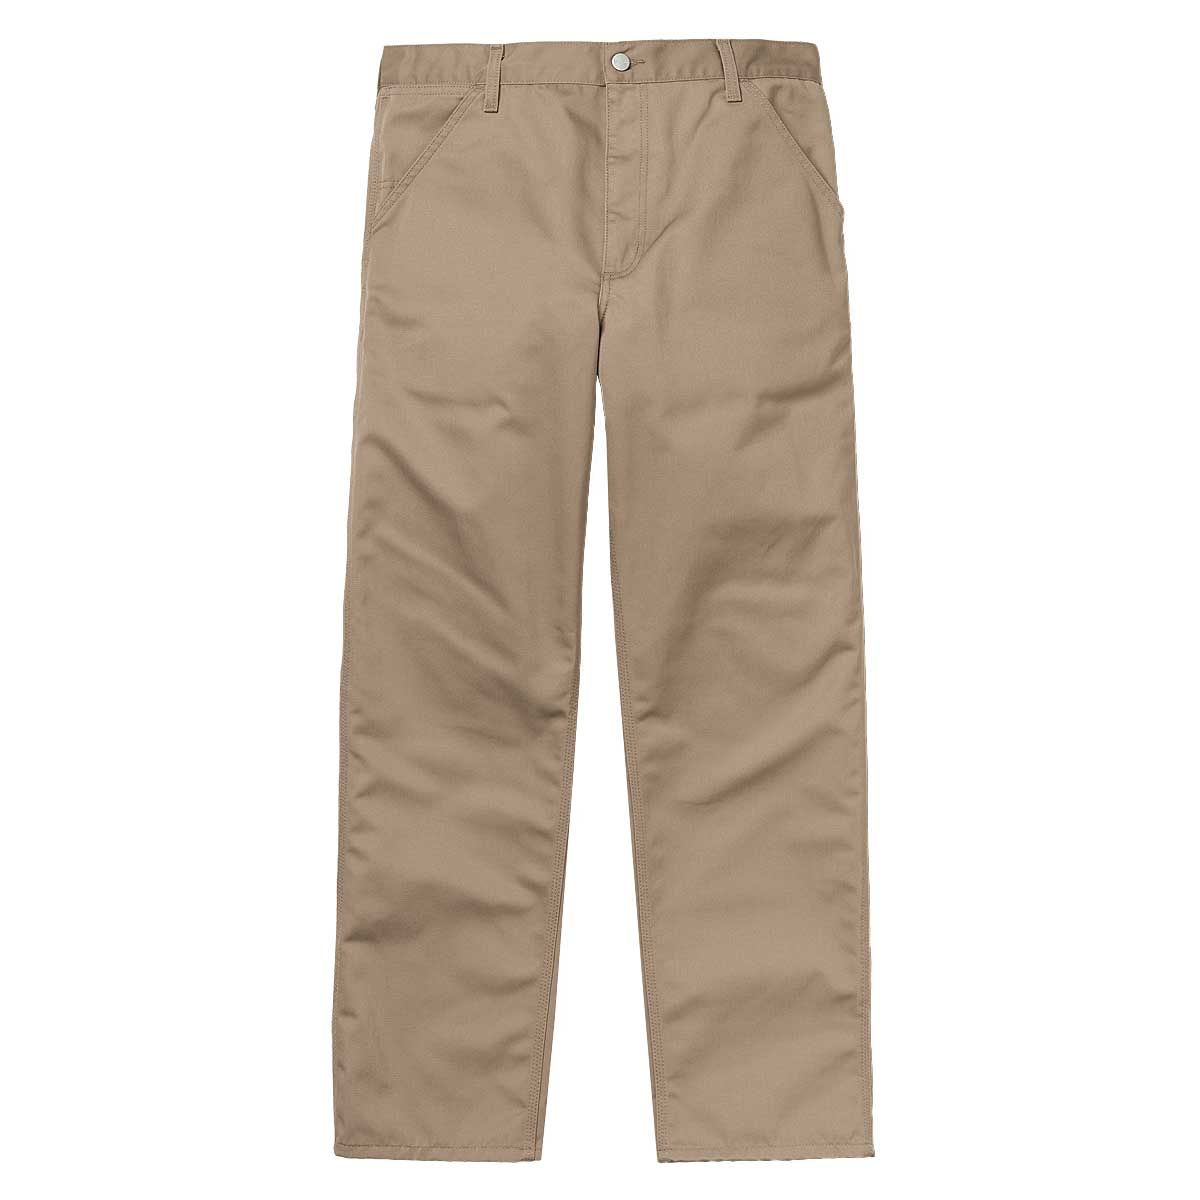 🏀 Get the Carhartt Simple Pants in beige | KICKZ